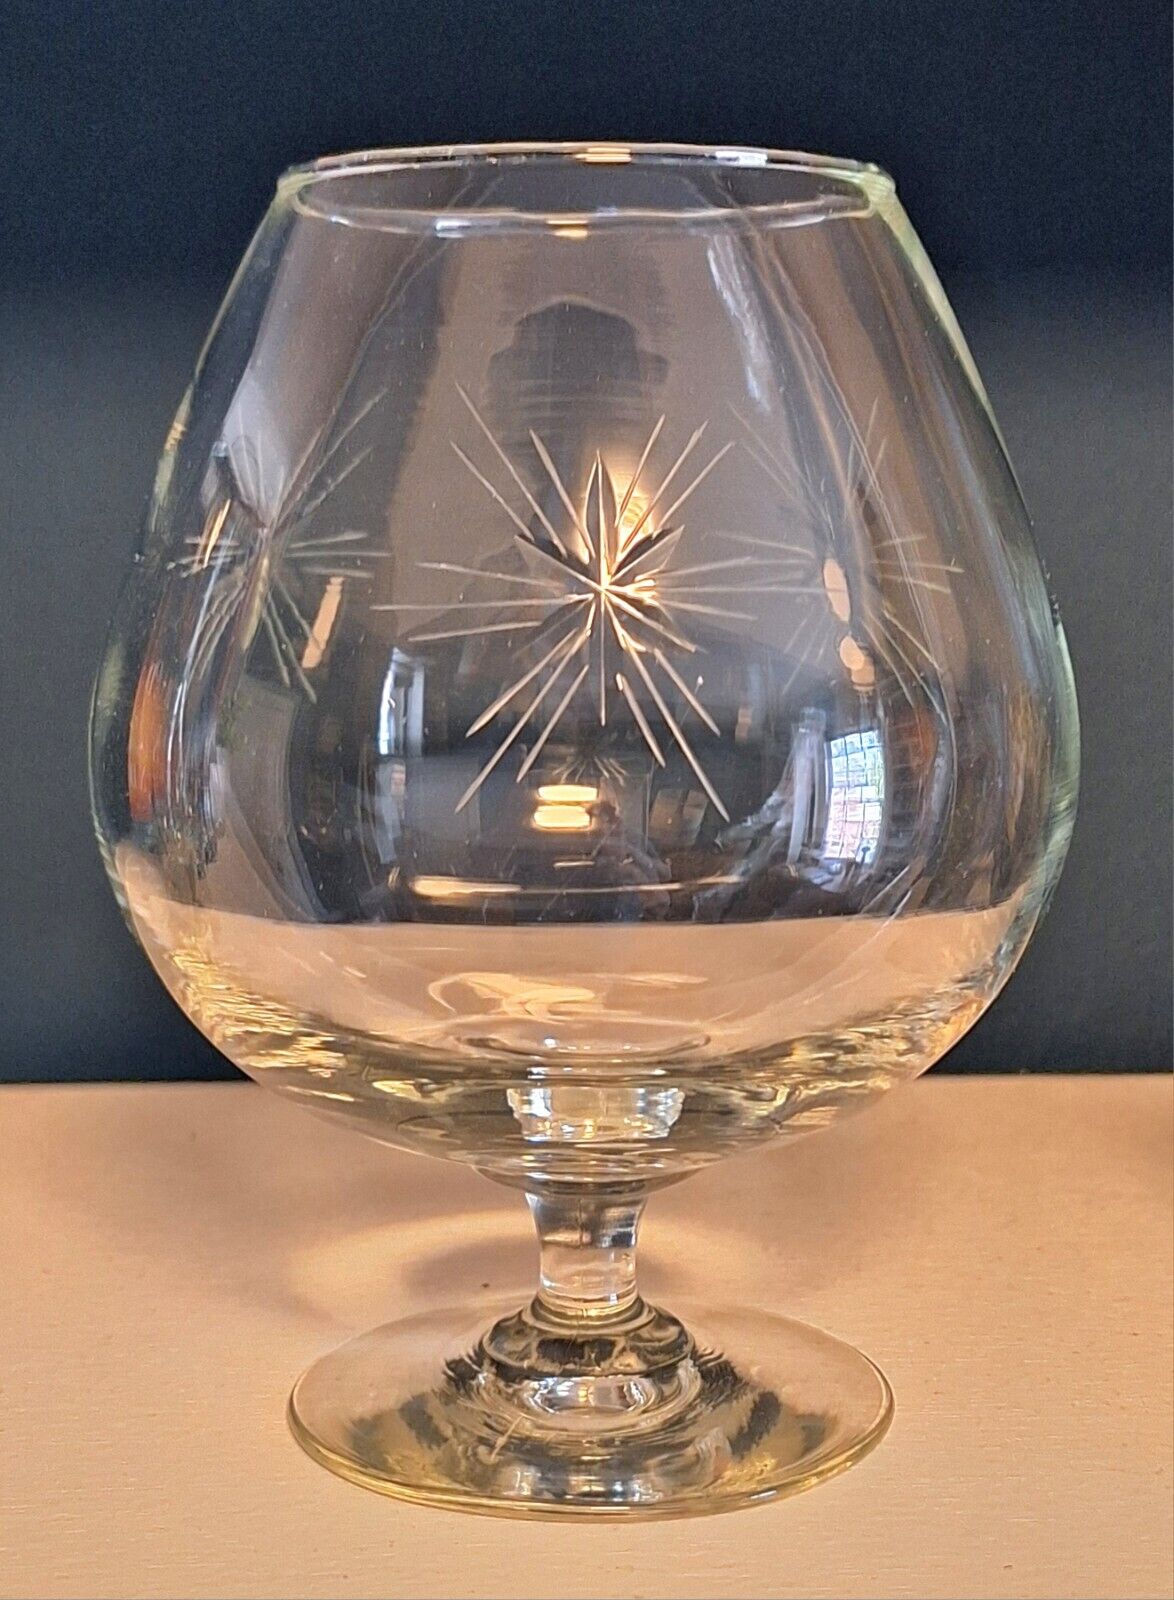 Vintage MCM Barware Brandy Snifter Six Point Star Susquehanna Glass 6